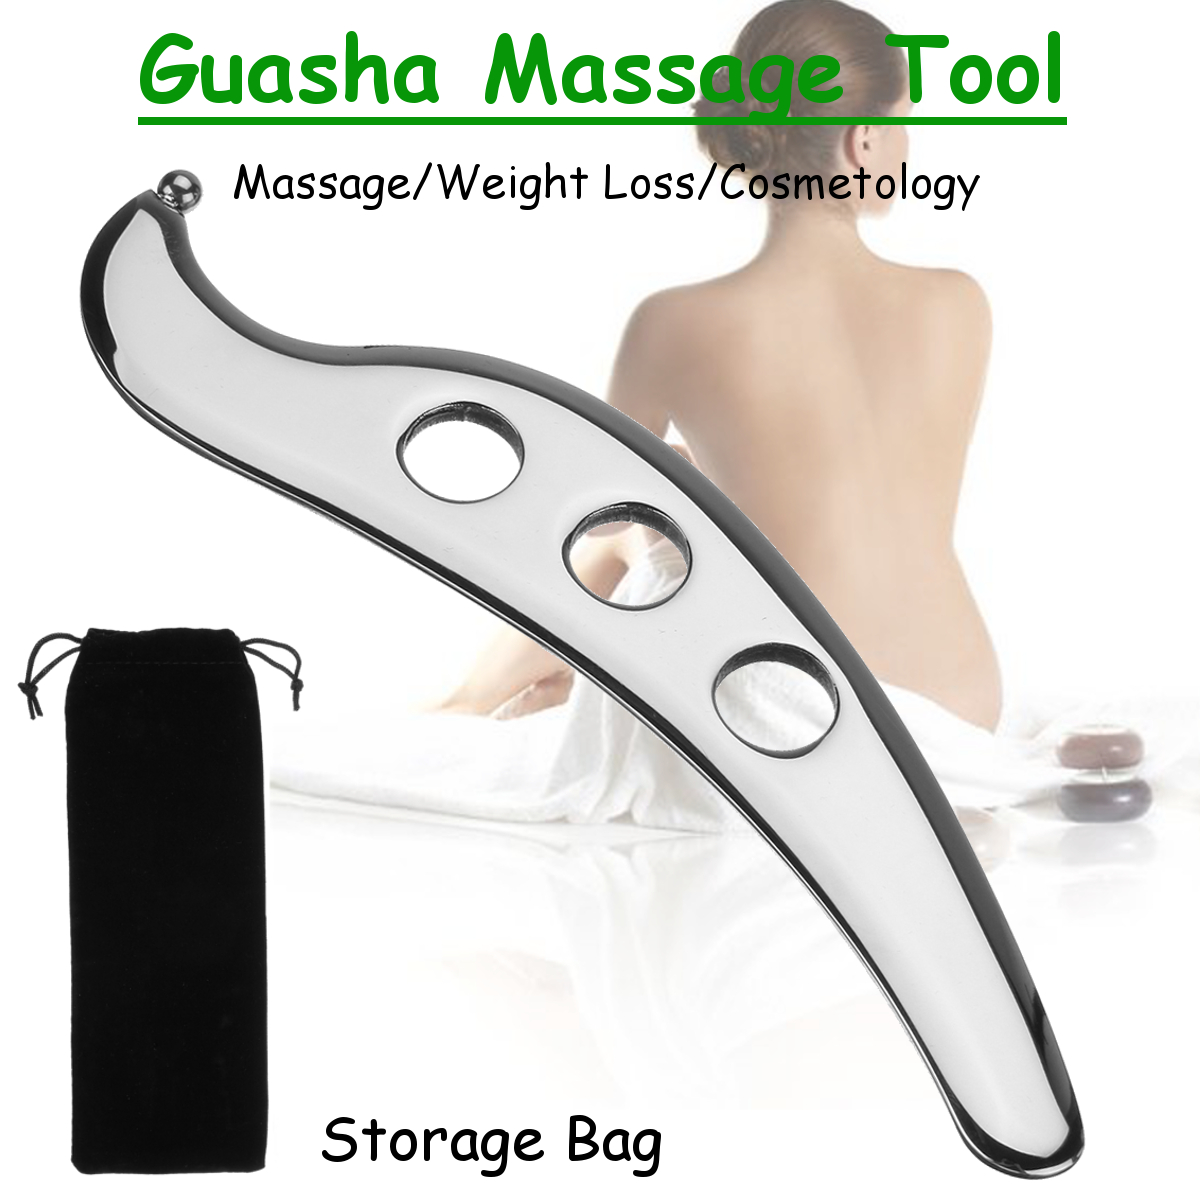 304-Stainless-Steel-Guasha-Manual-Massager-Gua-Sha-Scraping-SPA-Board-Body-Health-Tool-1404955